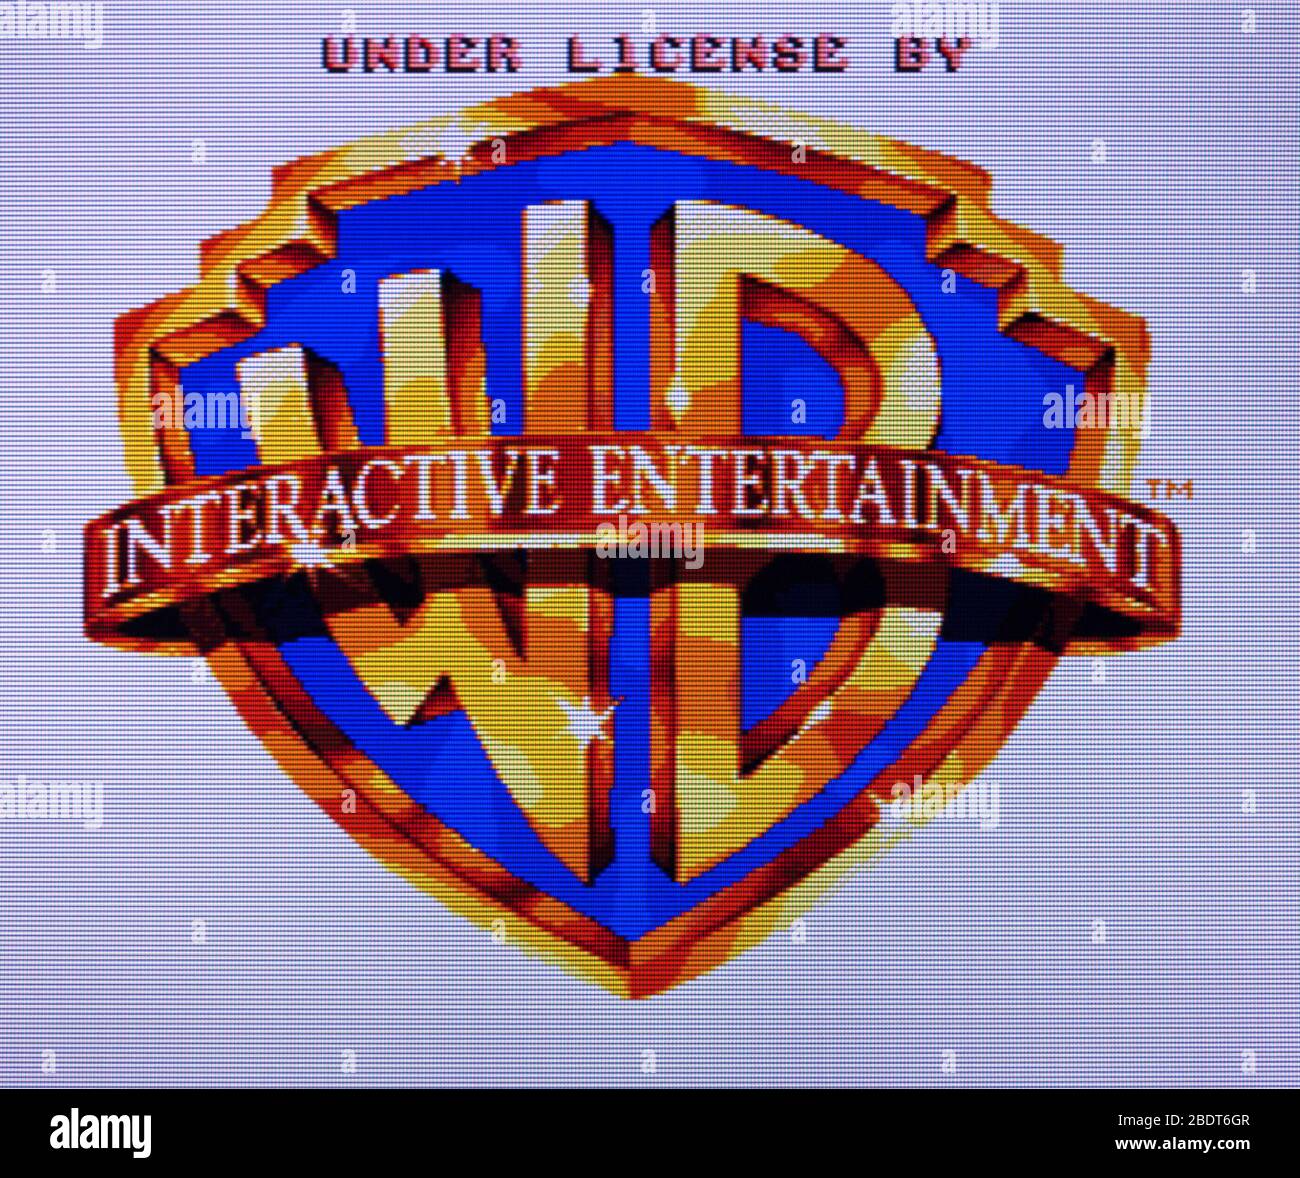 Warner Bros. Interactive Entertainment Inc. - MobyGames